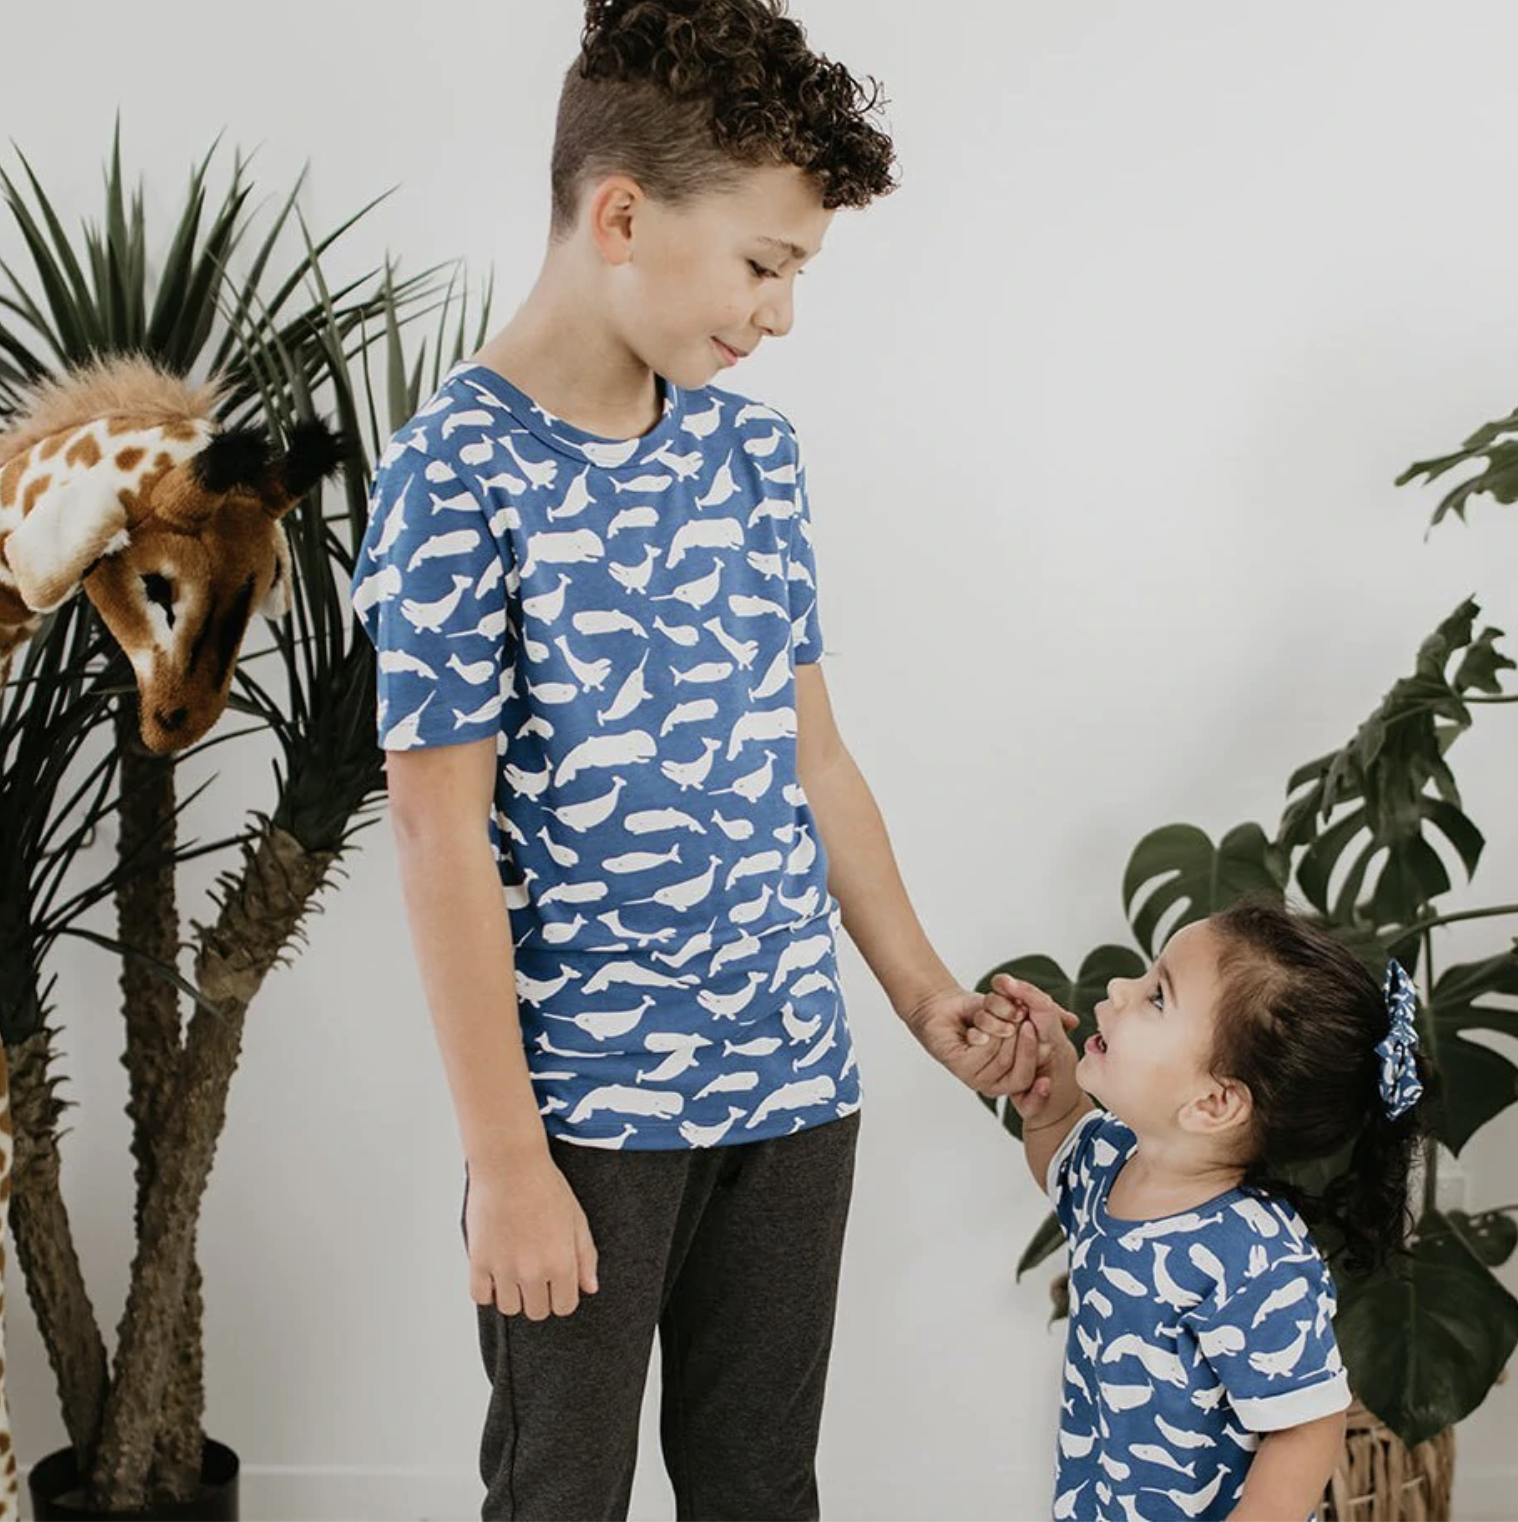 Two kids wearing matching whale print shirts